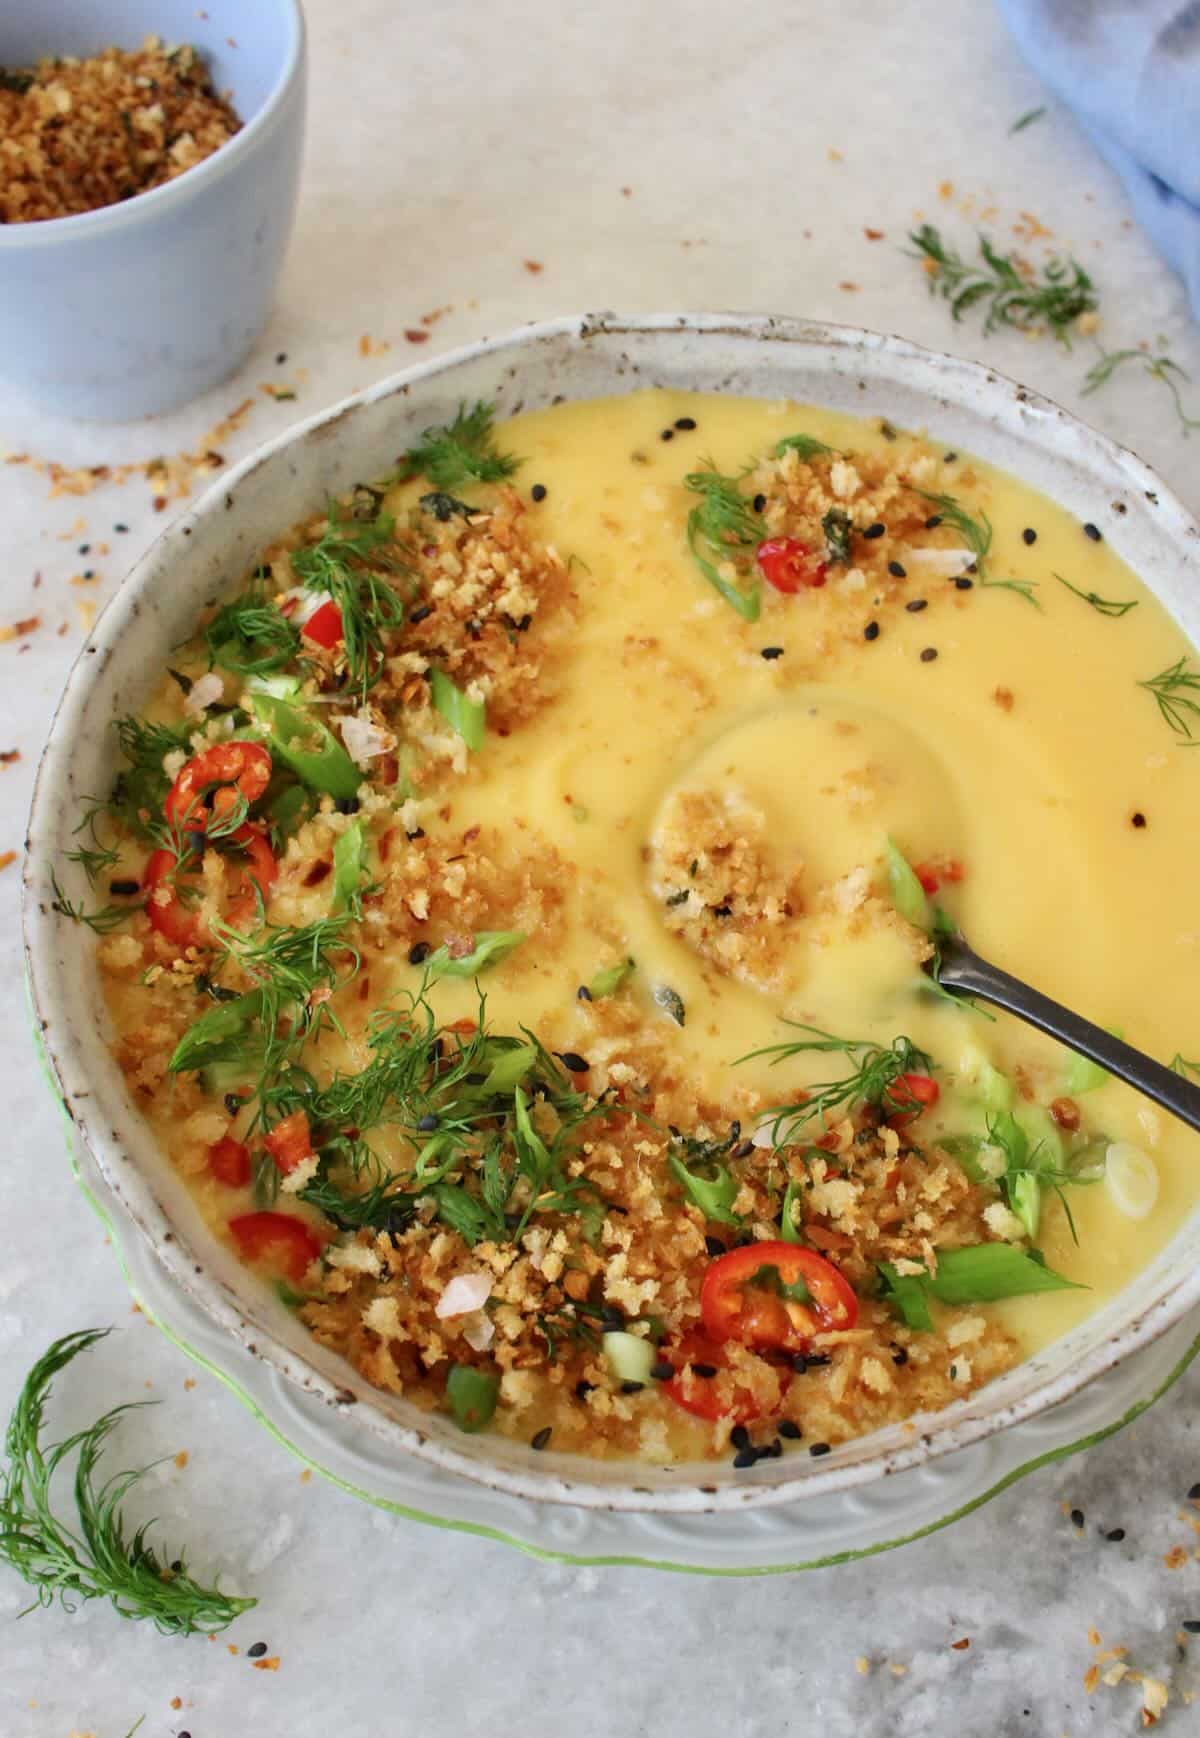 vegan cauliflower soup